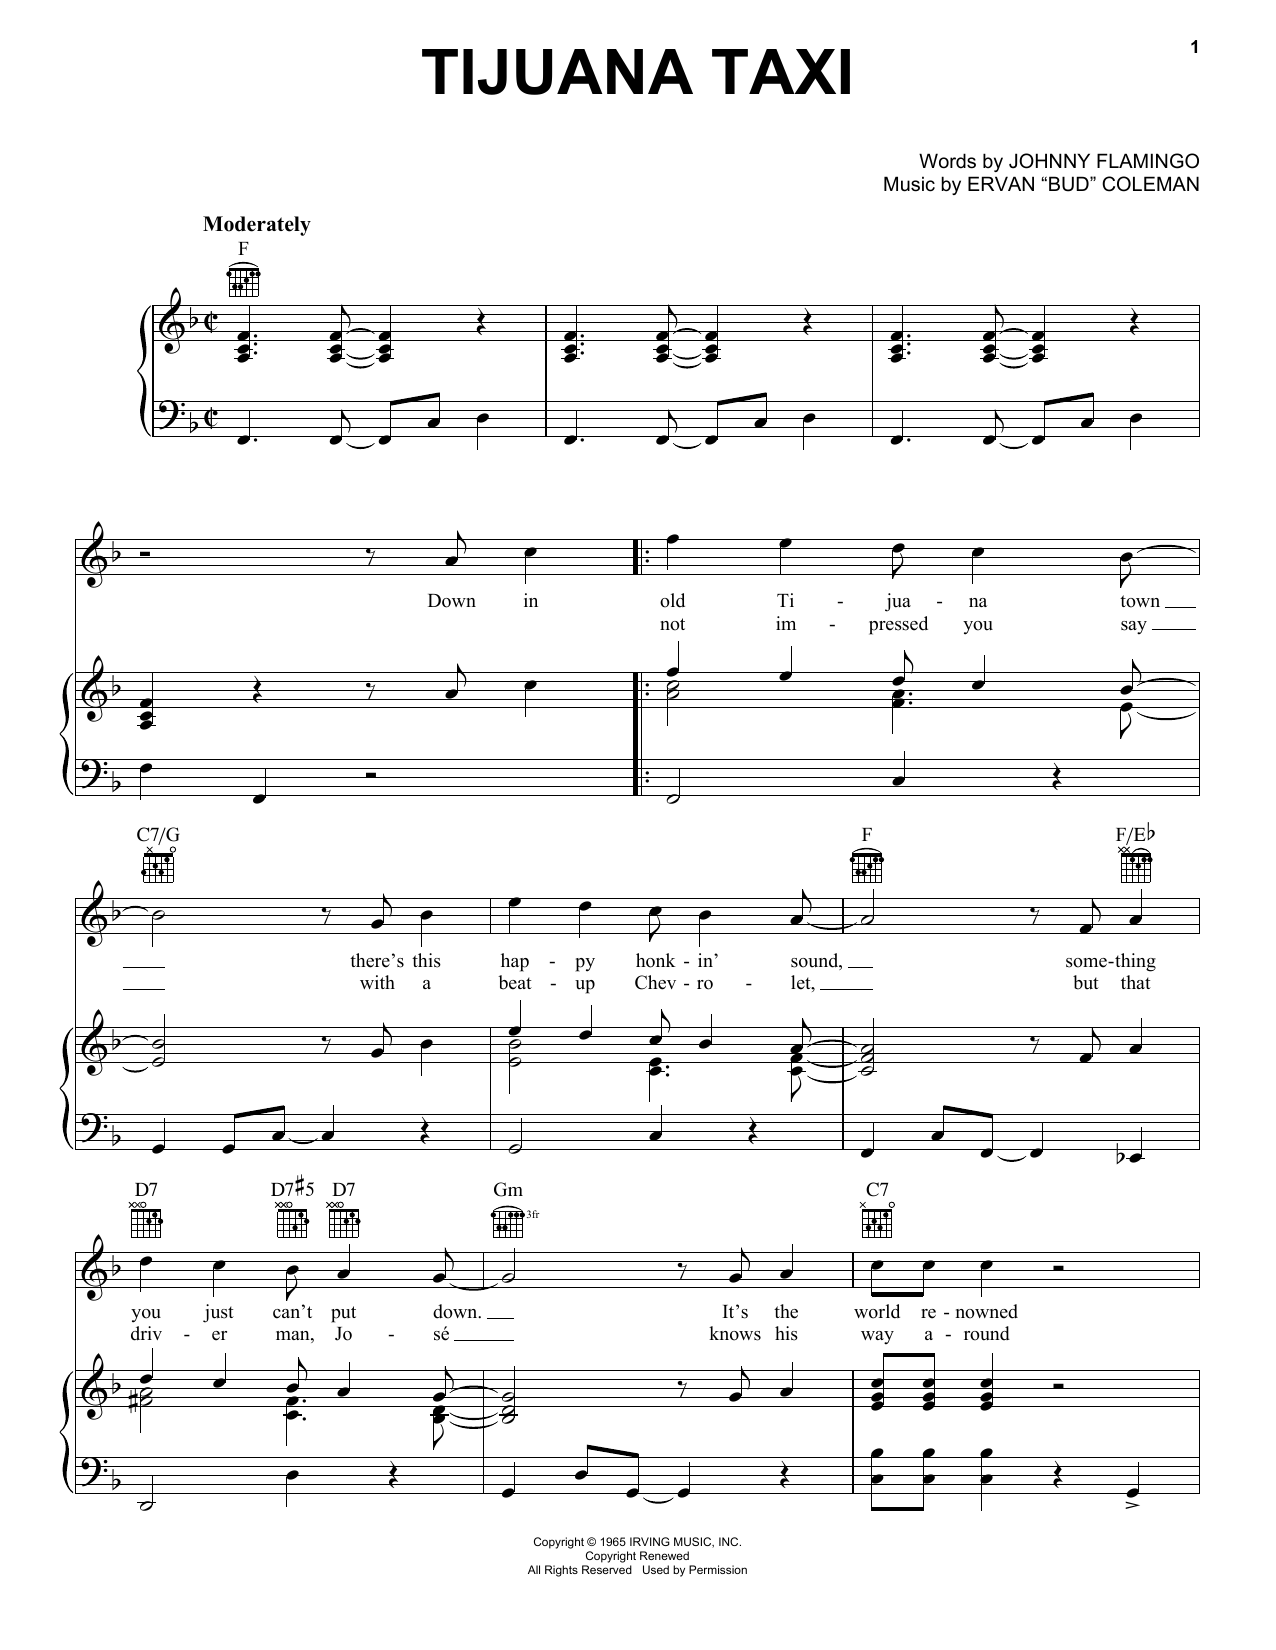 Herb Alpert & The Tijuana Brass Band Tijuana Taxi Sheet Music Notes & Chords for Violin - Download or Print PDF